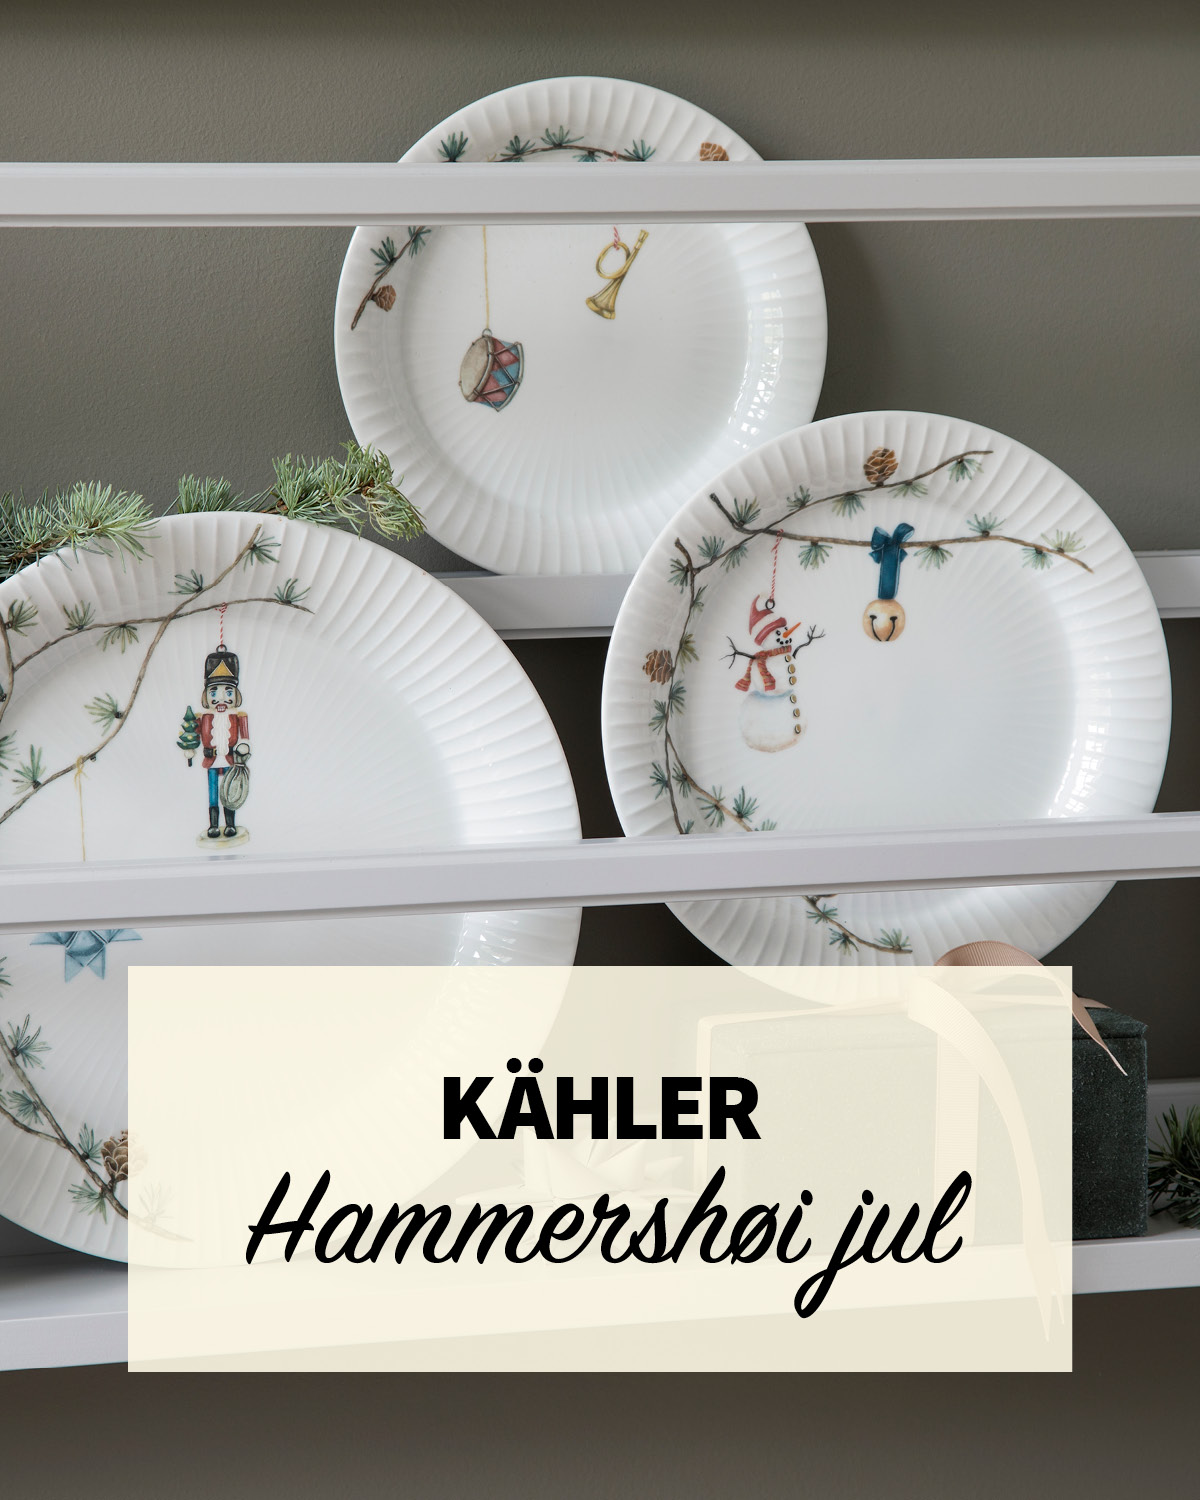 Kähler Hammershøi Jul